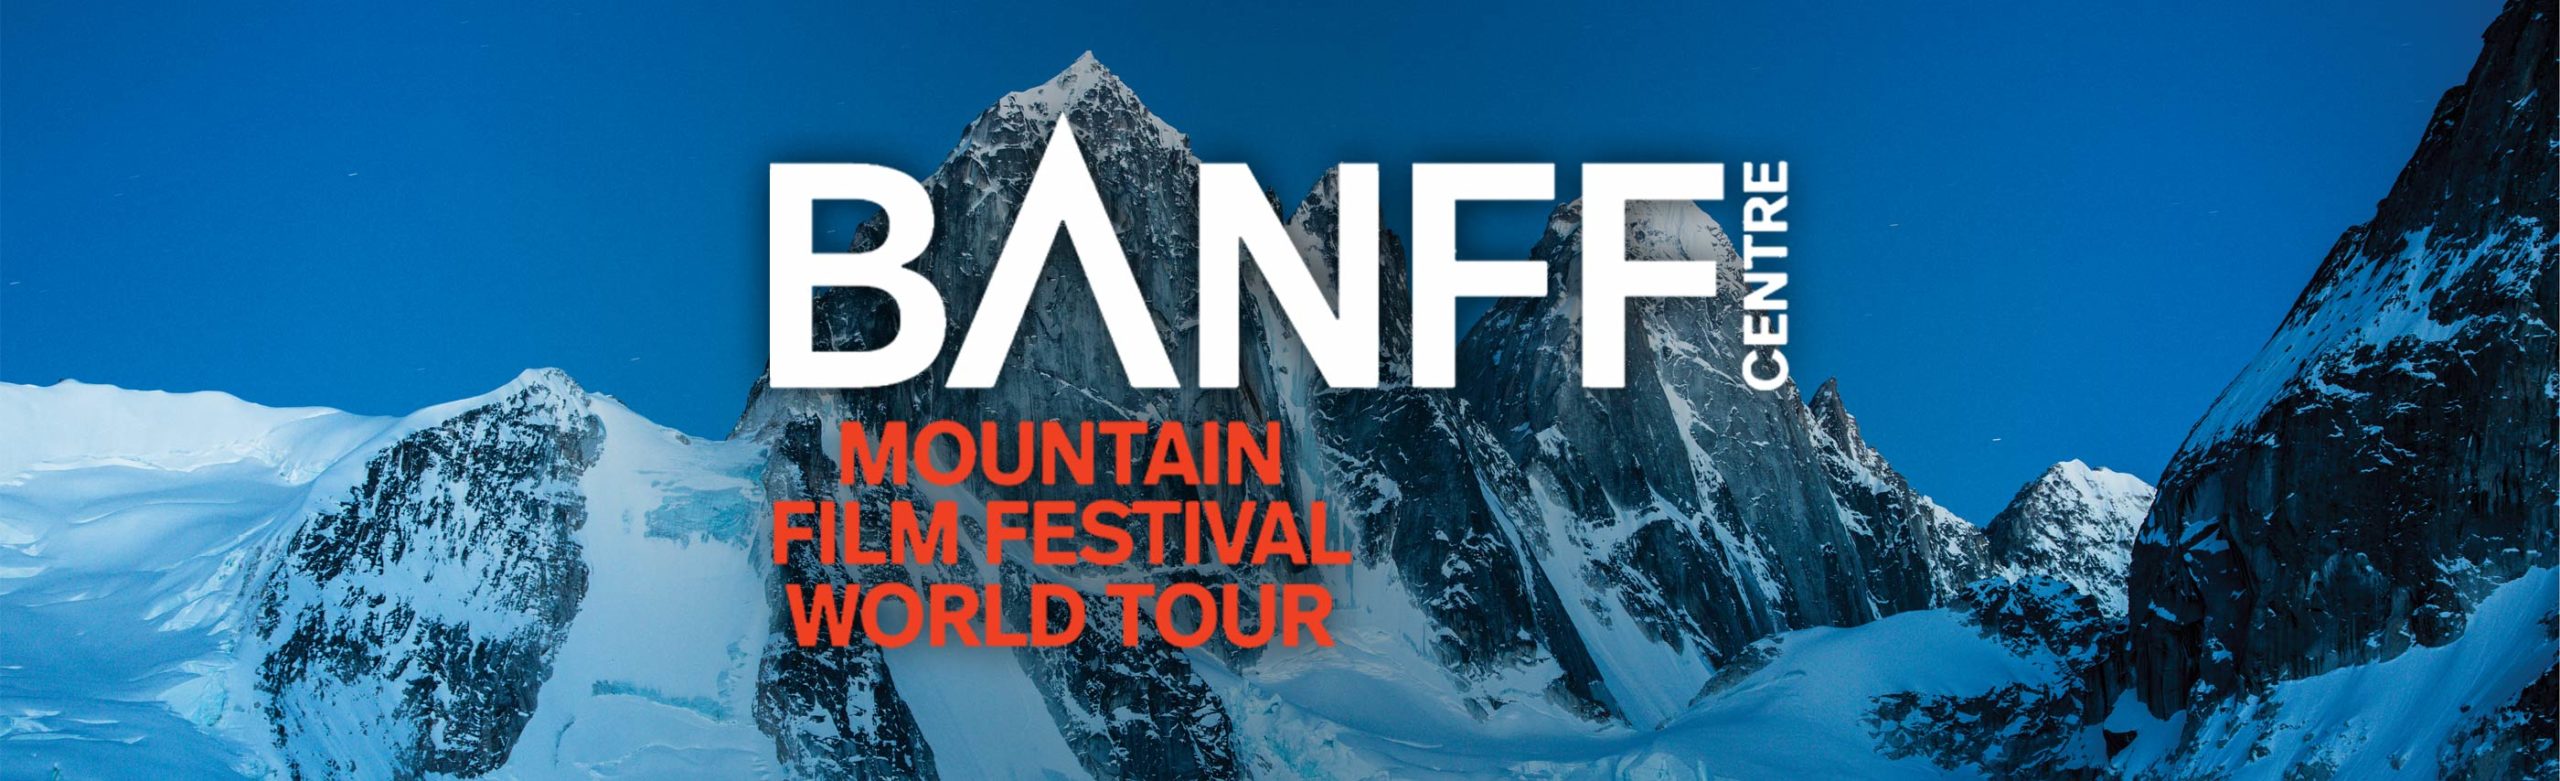 BANFF Mountain Film Festival